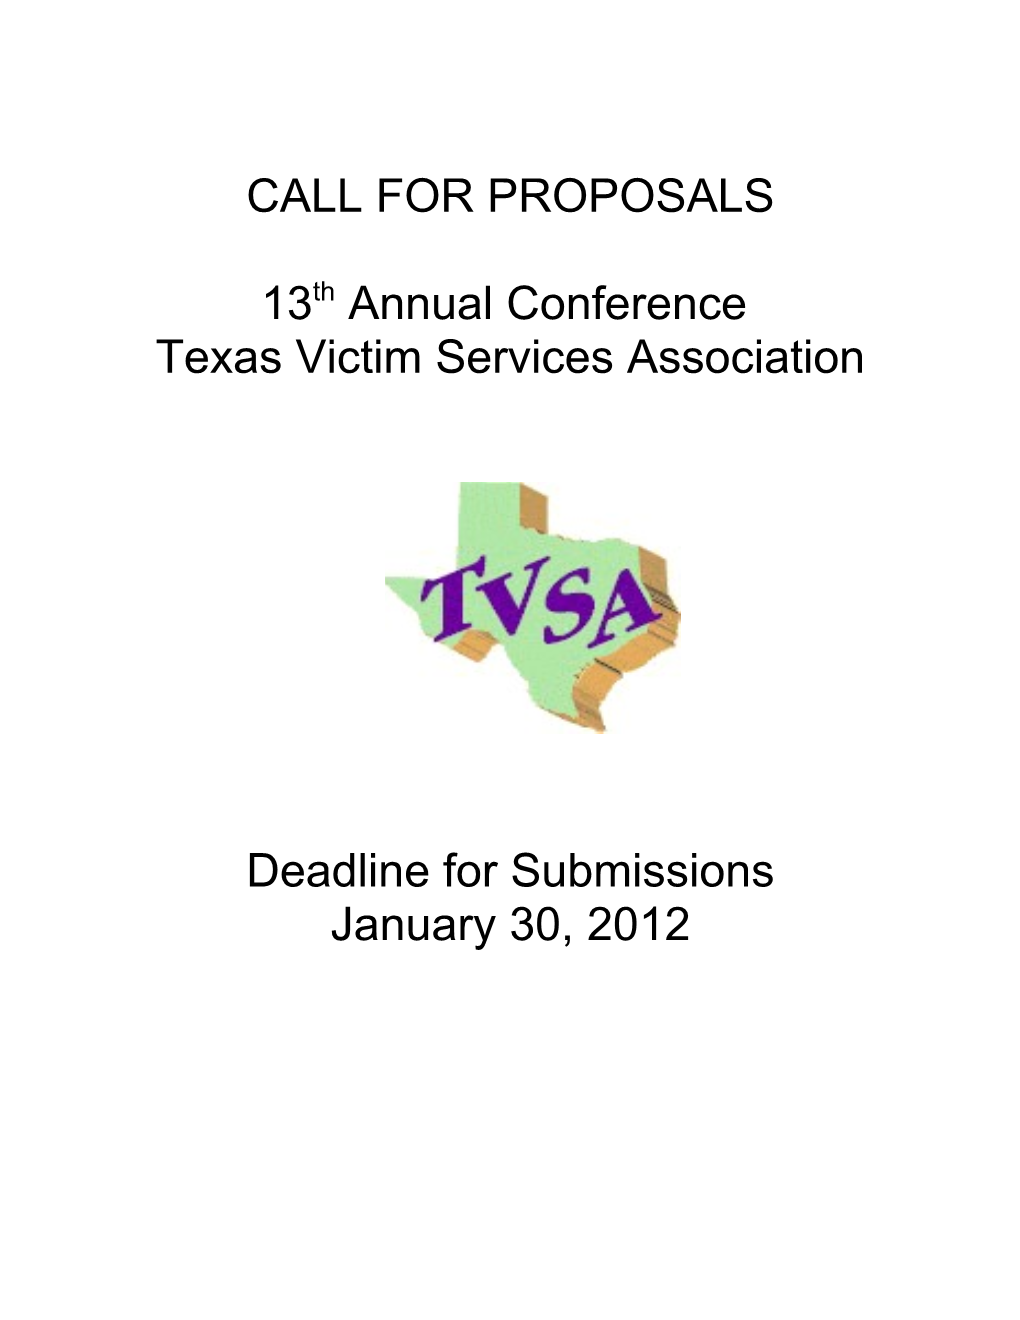 Texas Victim Services Association